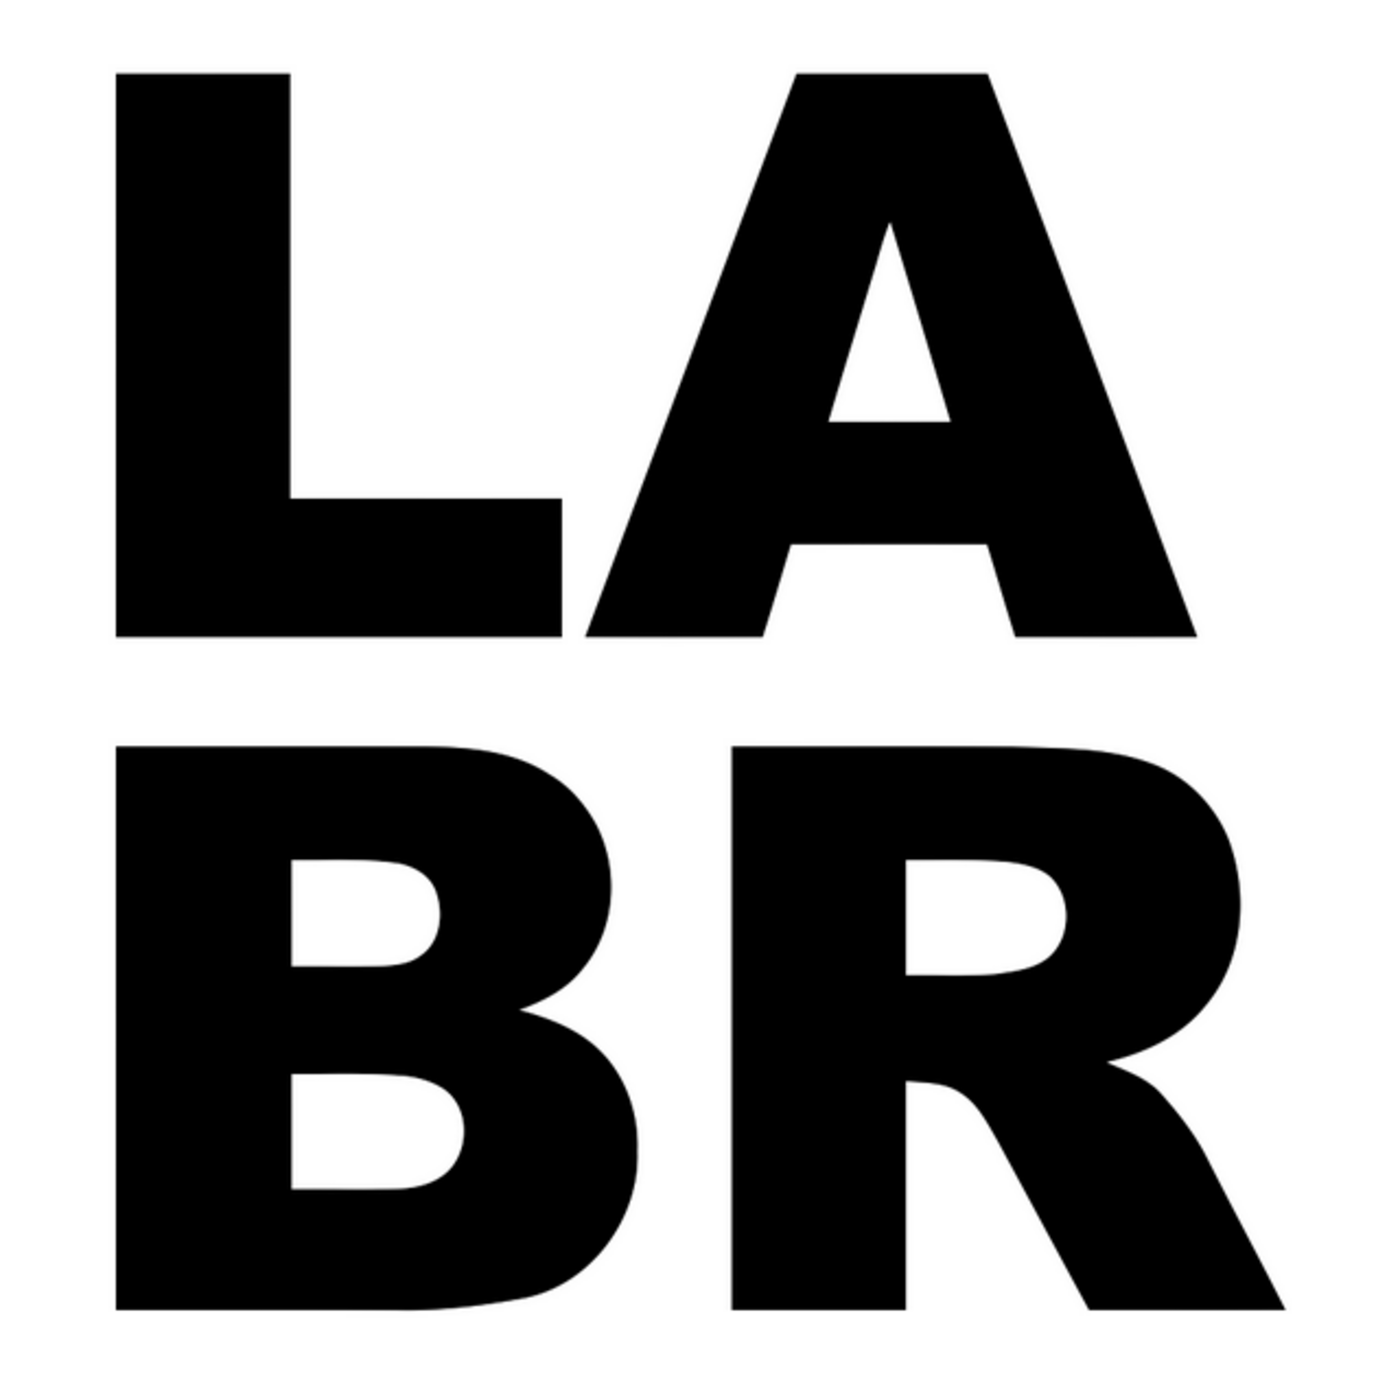 Episode 1022: LABR Presents DJ Liam Wabbit - Banging in Brighton 10